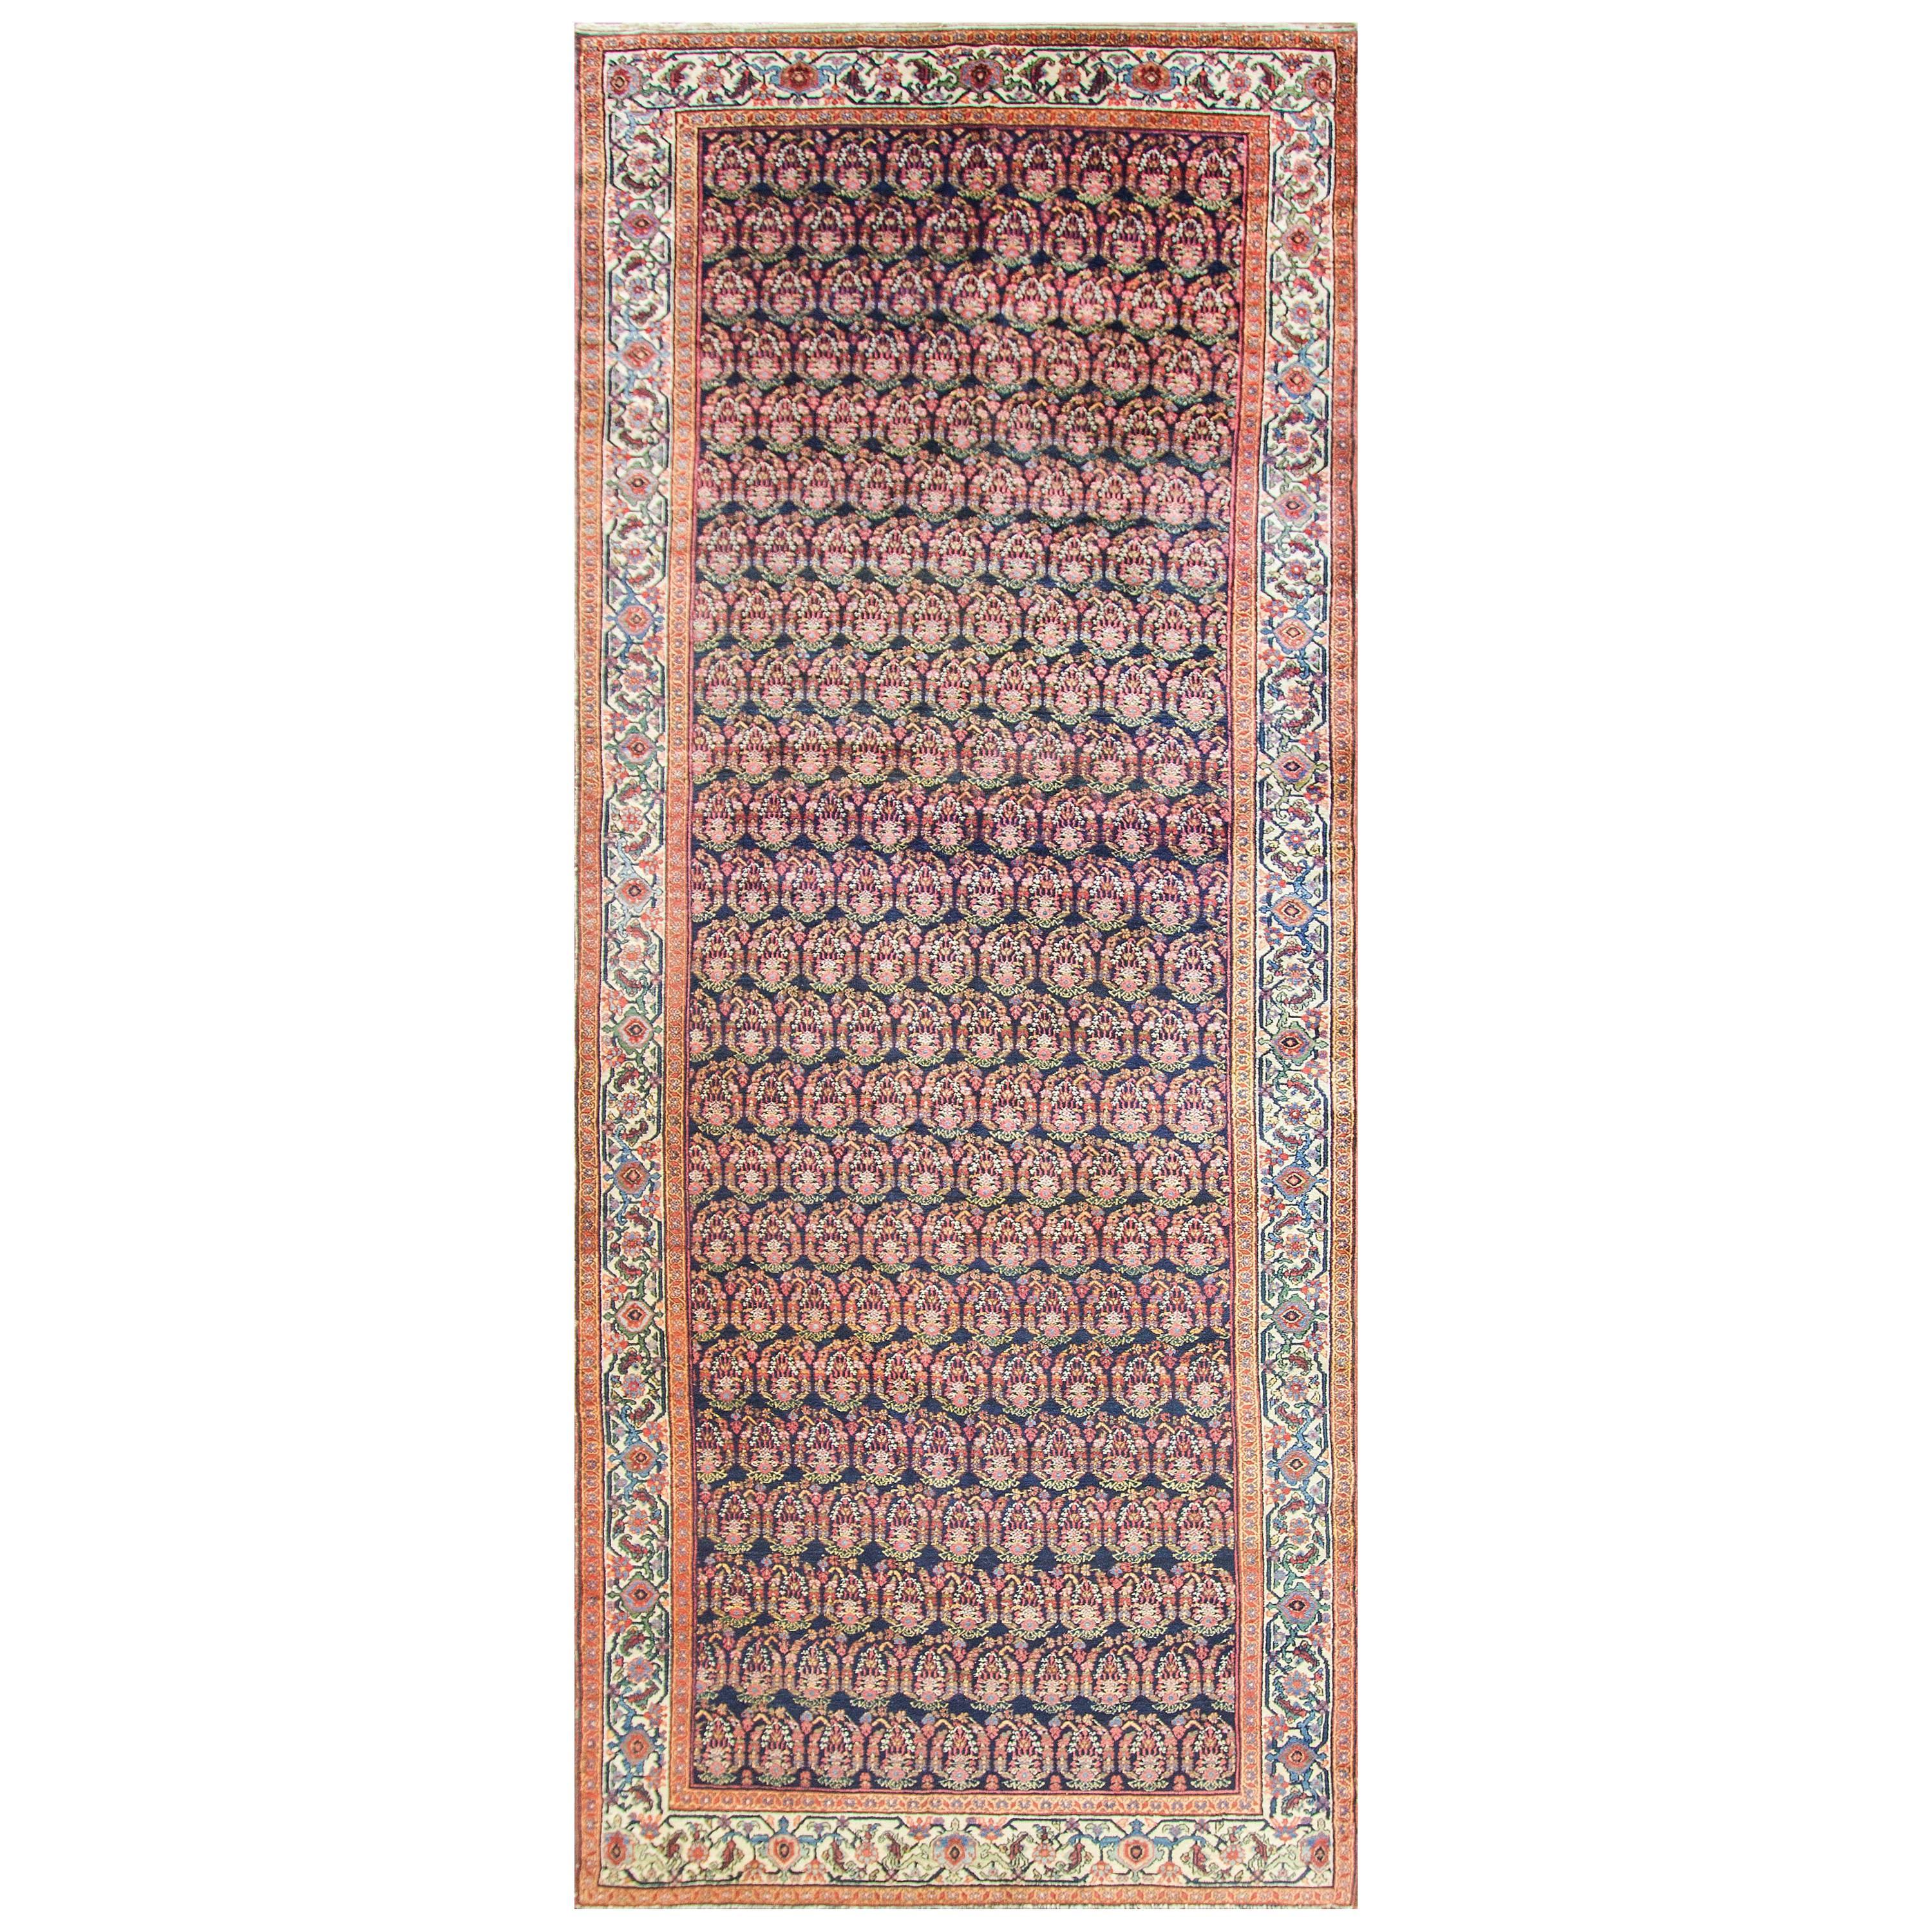  Antique Persian Senneh Malayer Carpet, Gallery/Runner Size